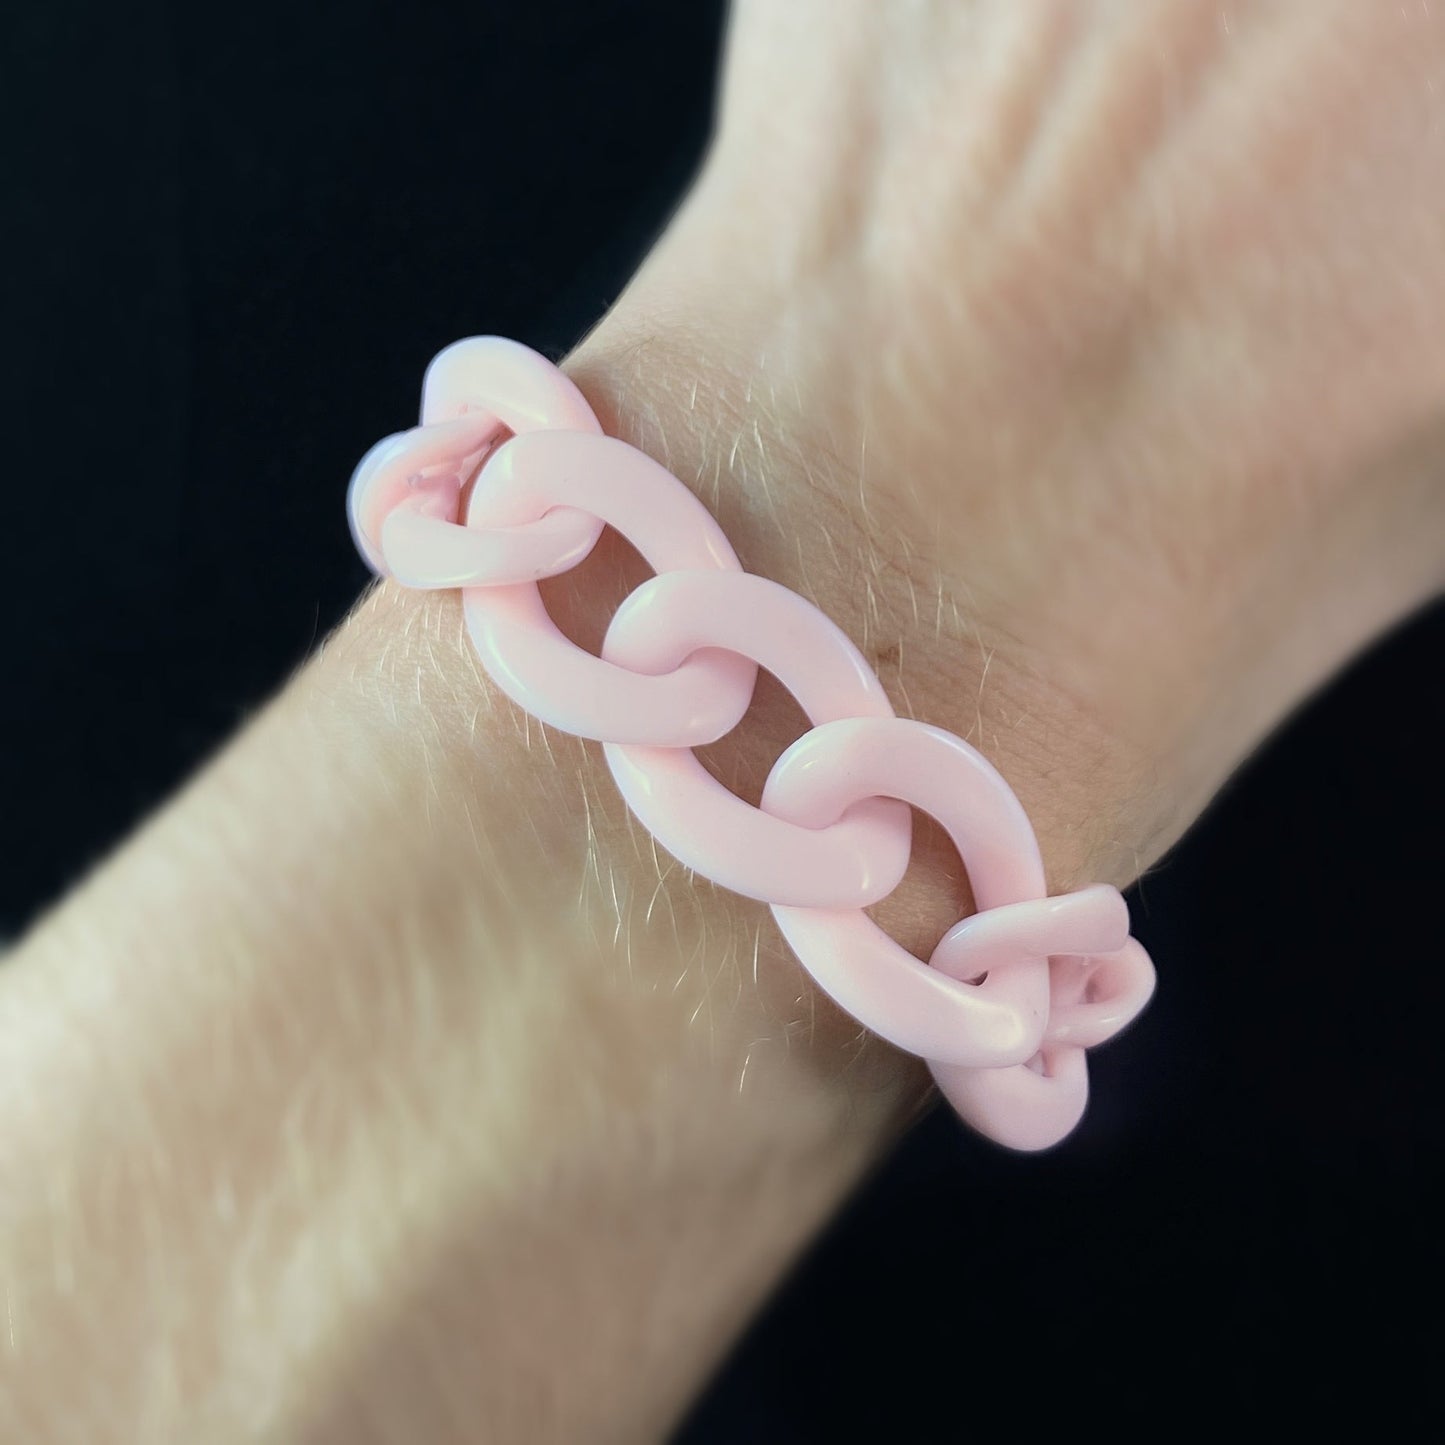 Chunky Chain Link Bracelet - Rose